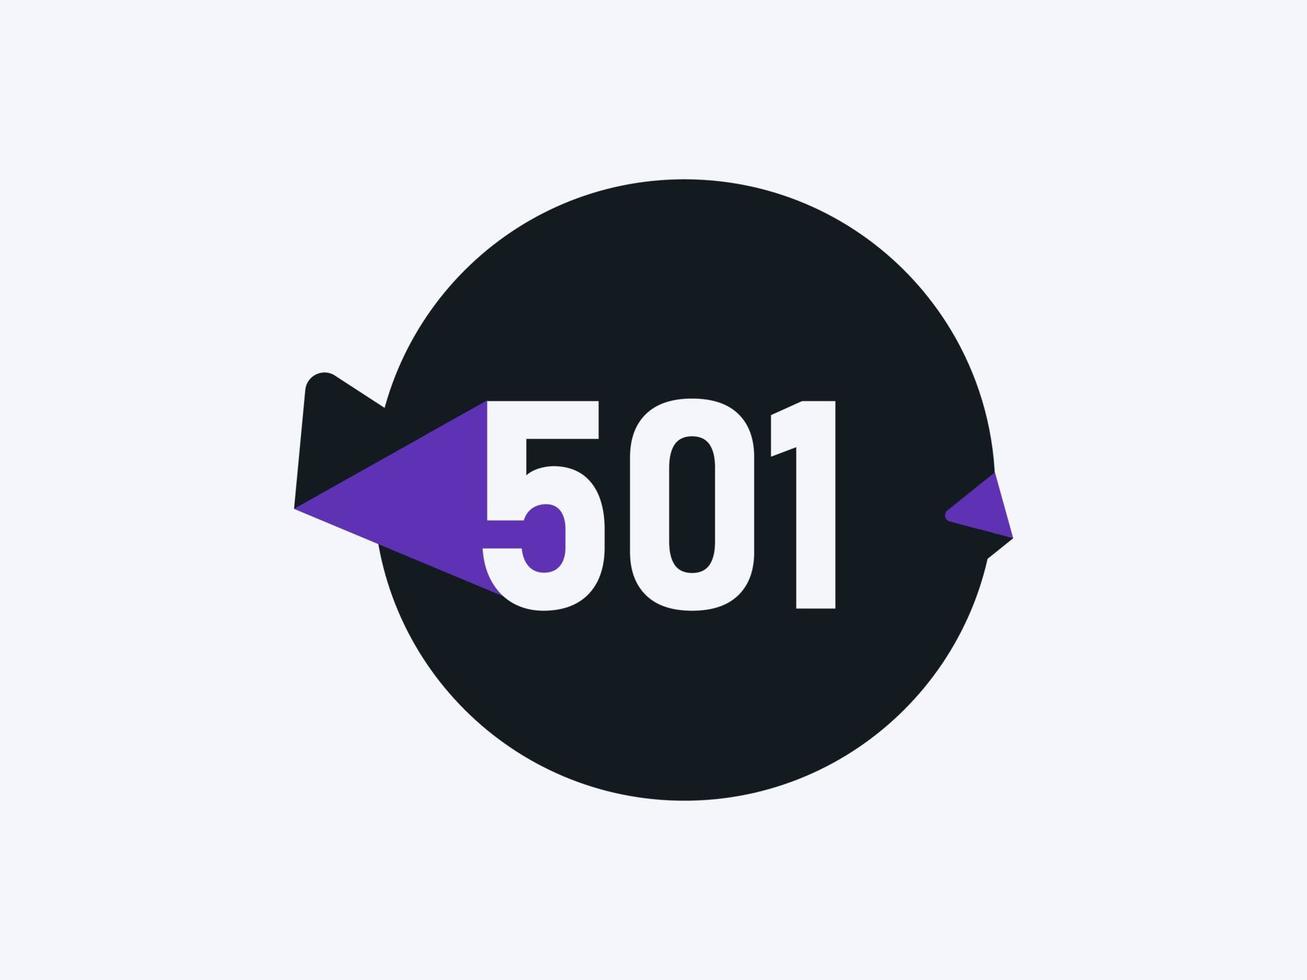 501 Number logo icon design vector image. Number logo icon design vector image